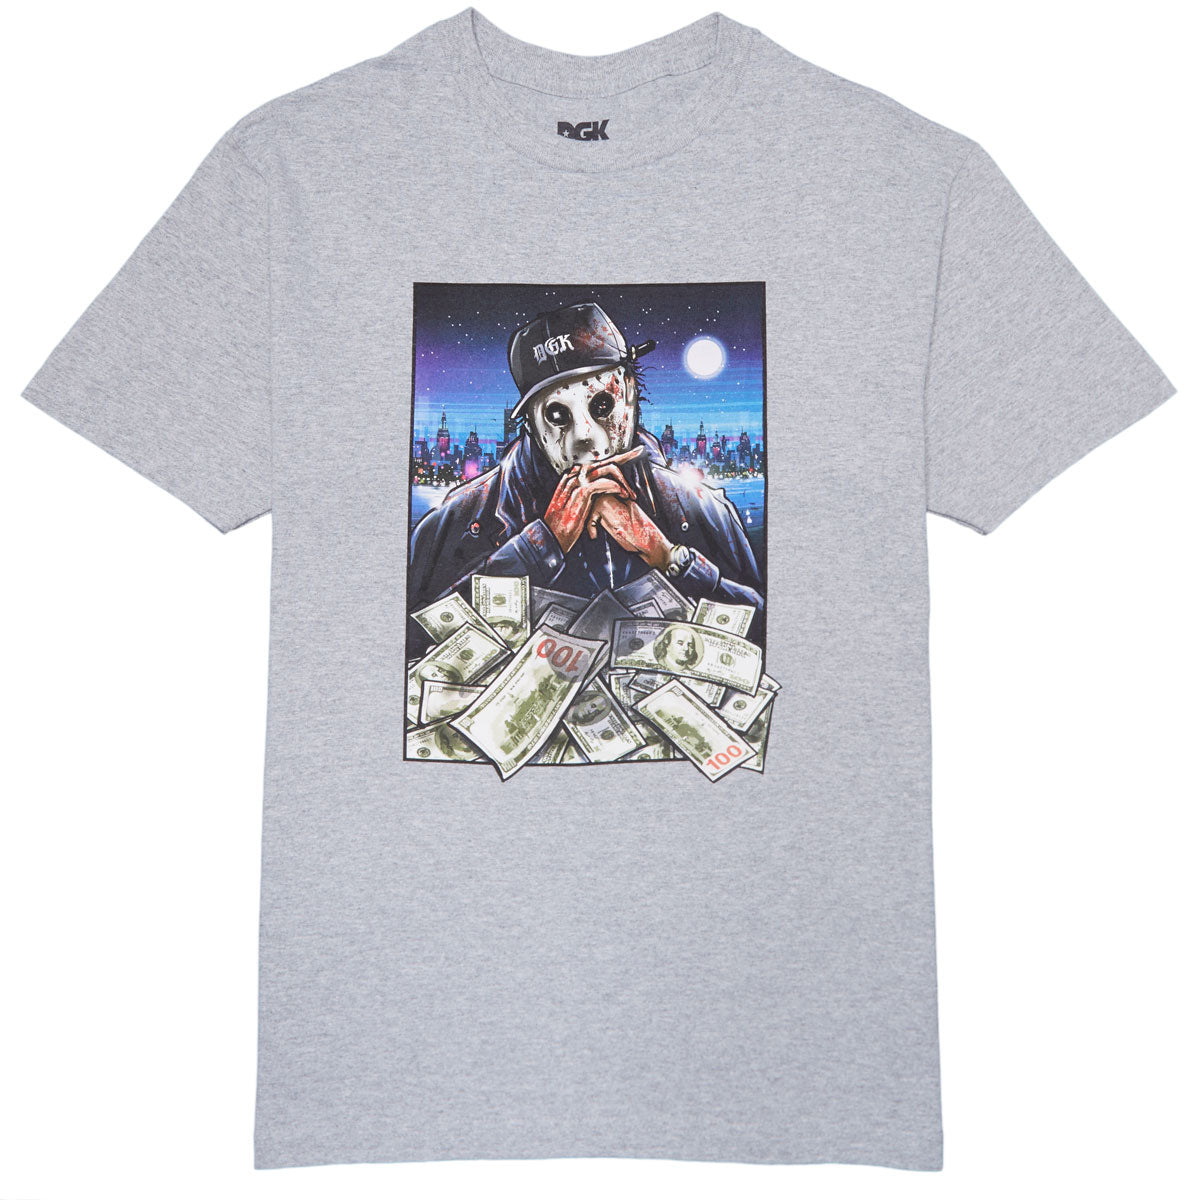 DGK Hood King T-Shirt - Heather Gray image 1